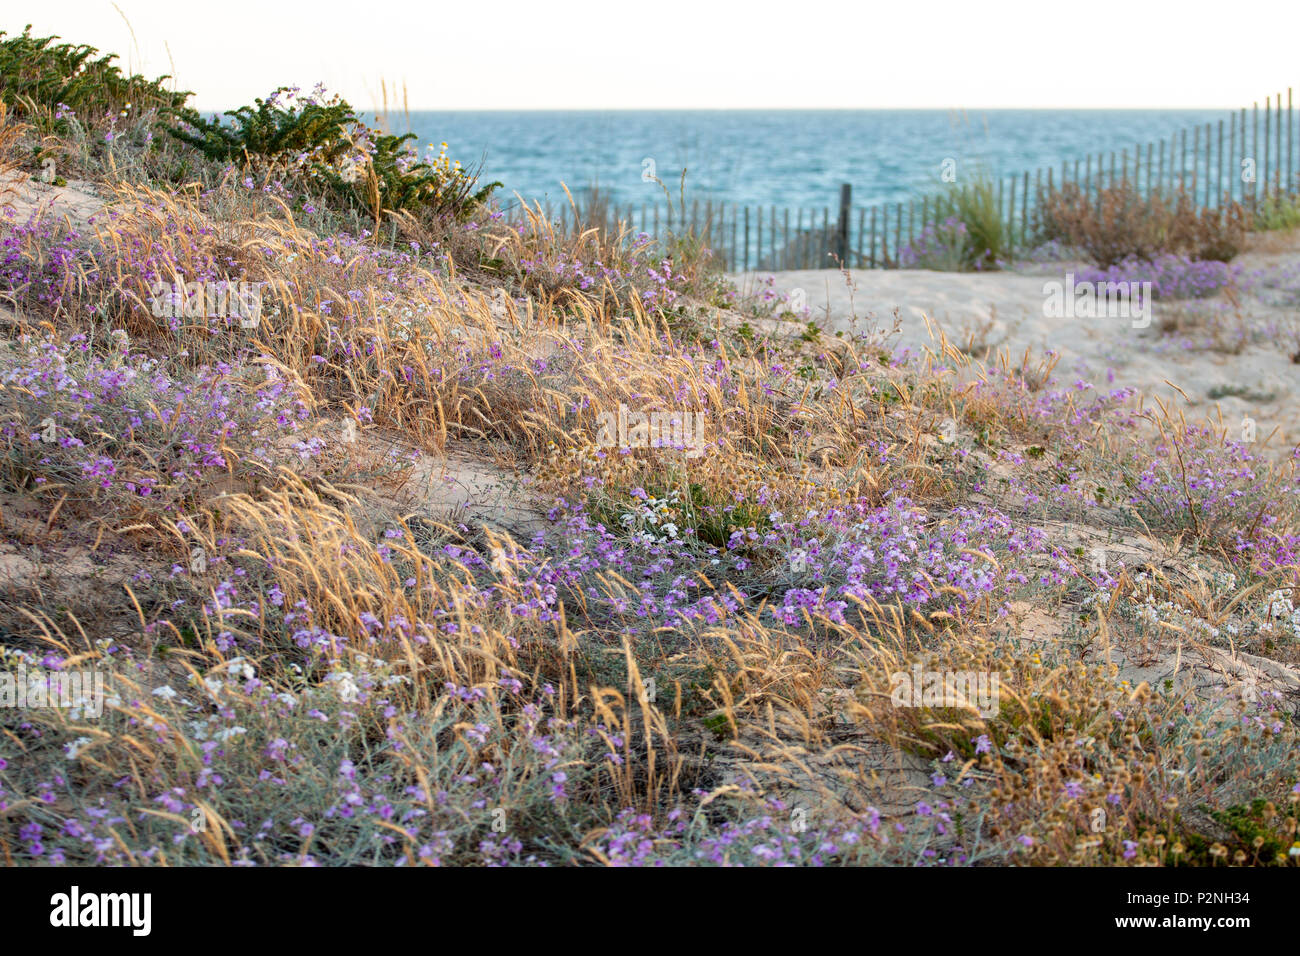 Close up view of European marram grass (Ammophila arenaria) on sand dunes. Stock Photo